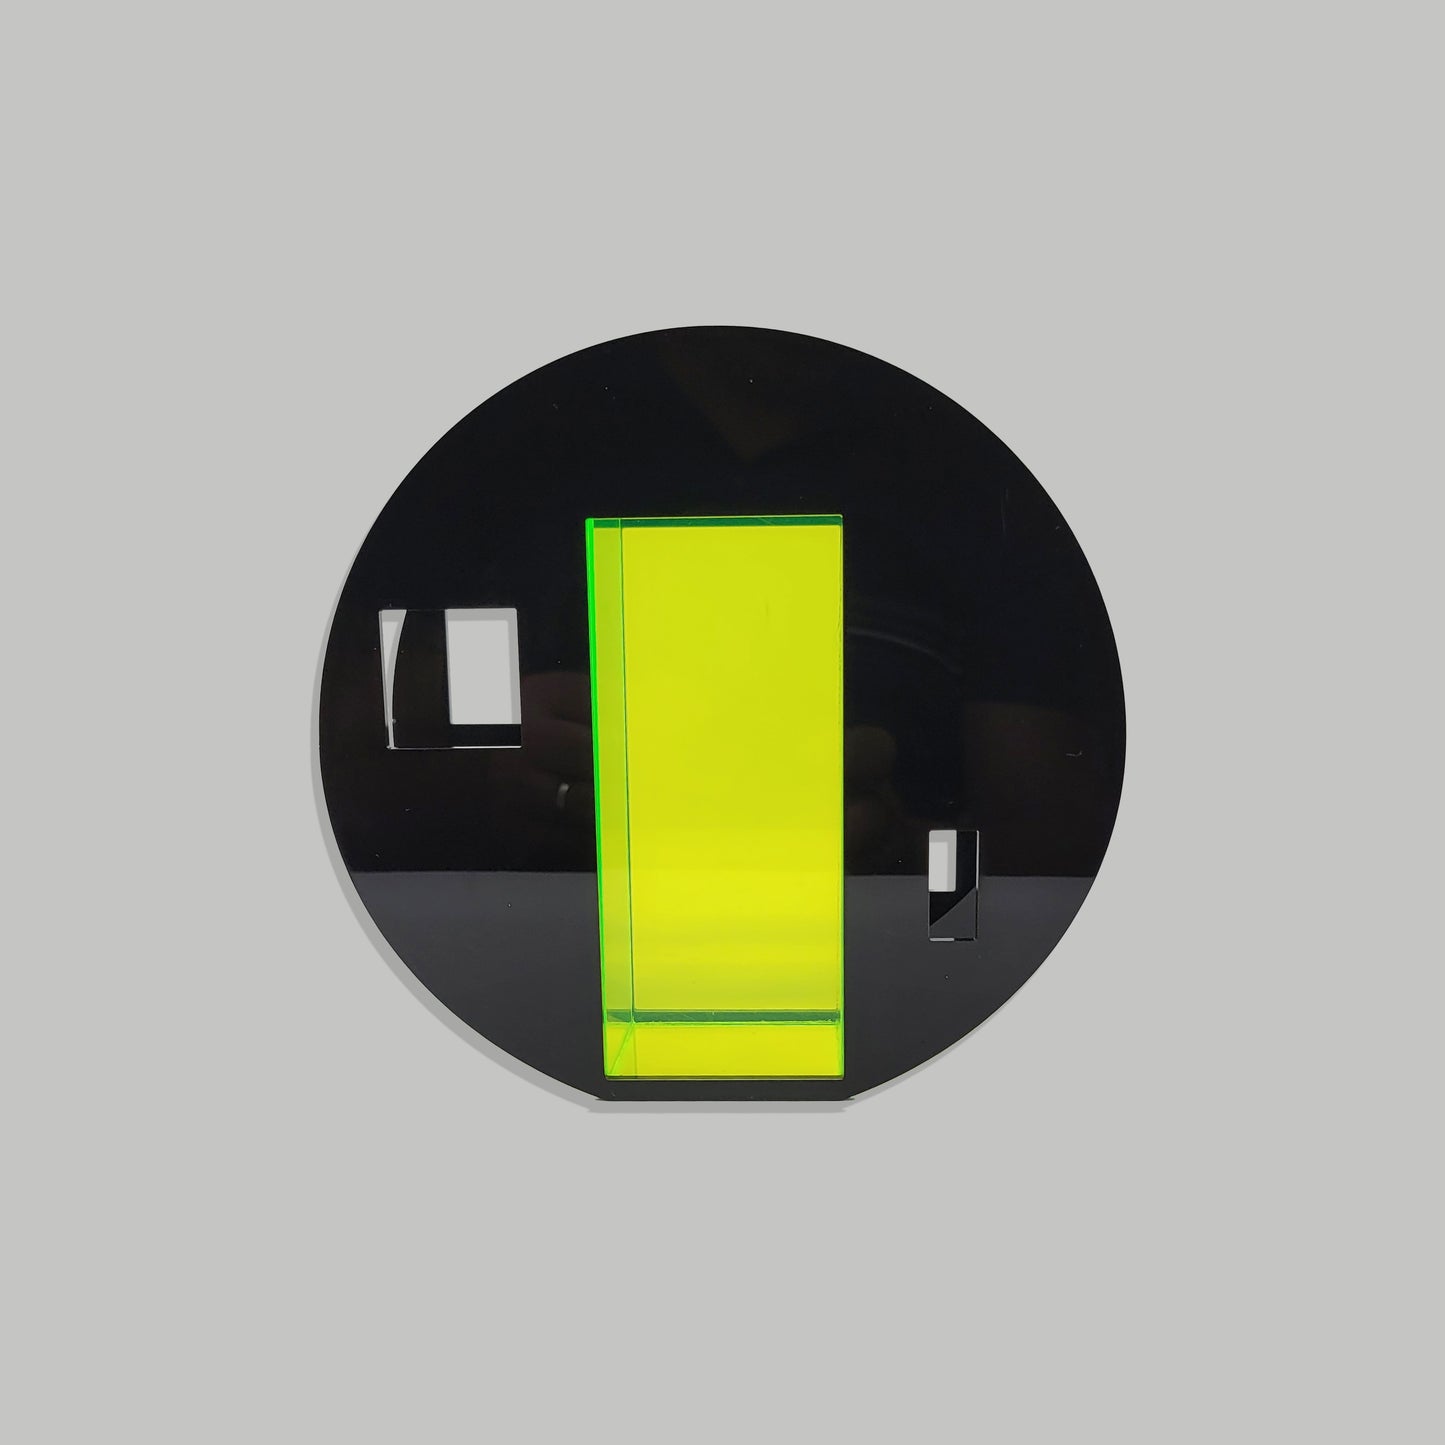 Neon Noir: Abstract Black Acrylic Vase with Green Center